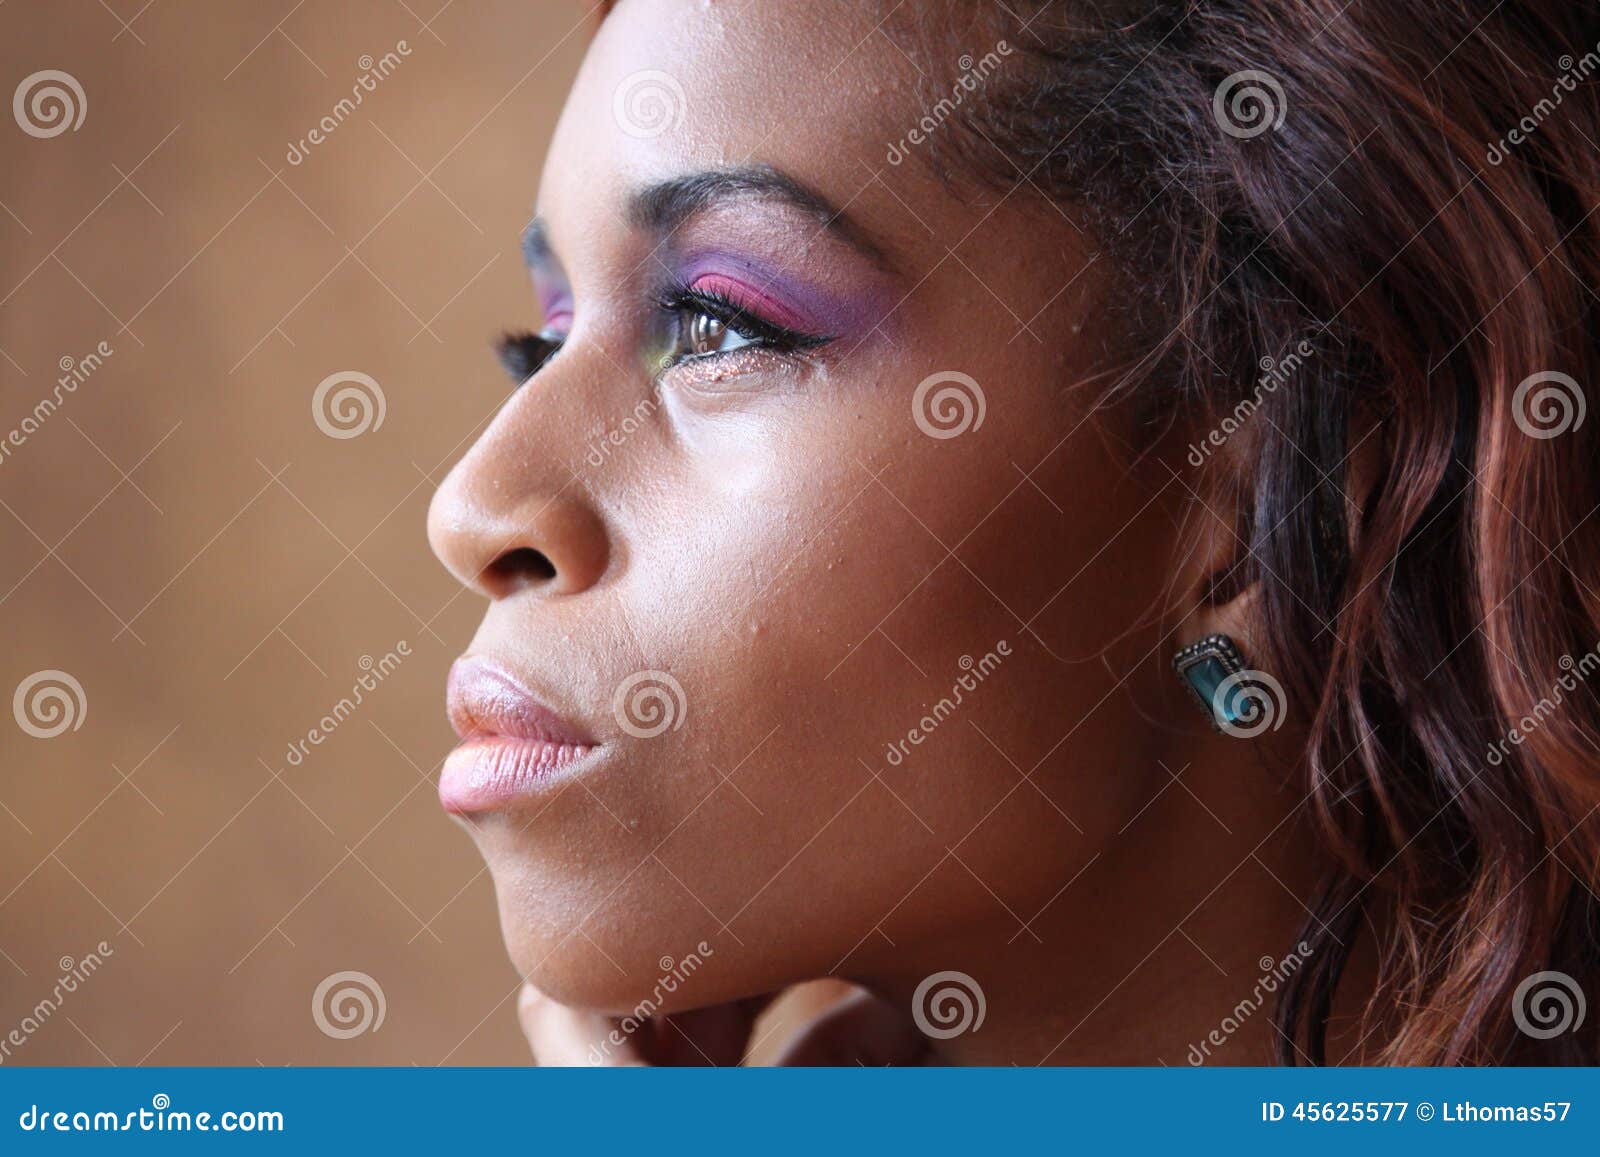 young hispanic black woman profile headshot